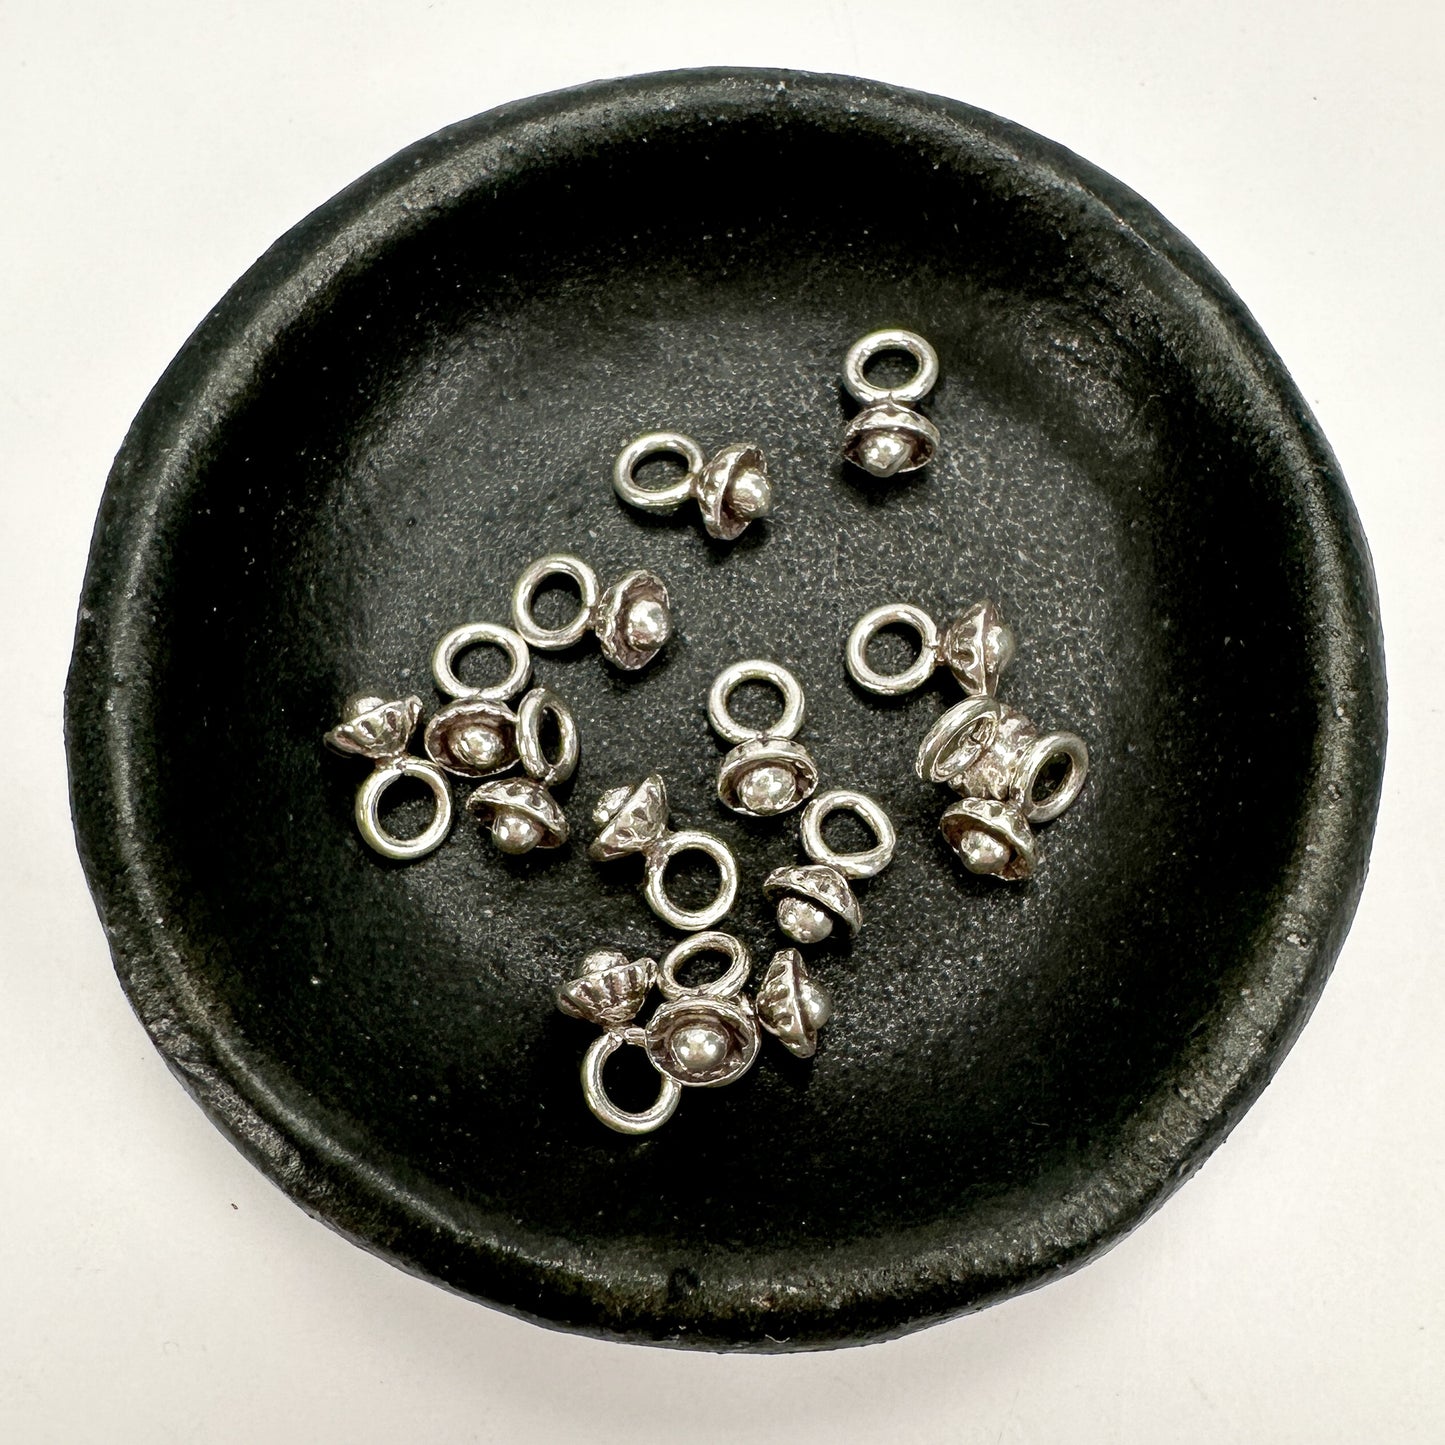 Tiny Pod Flower Charm (Sterling Silver) Charm - 1 pc. (M1920)